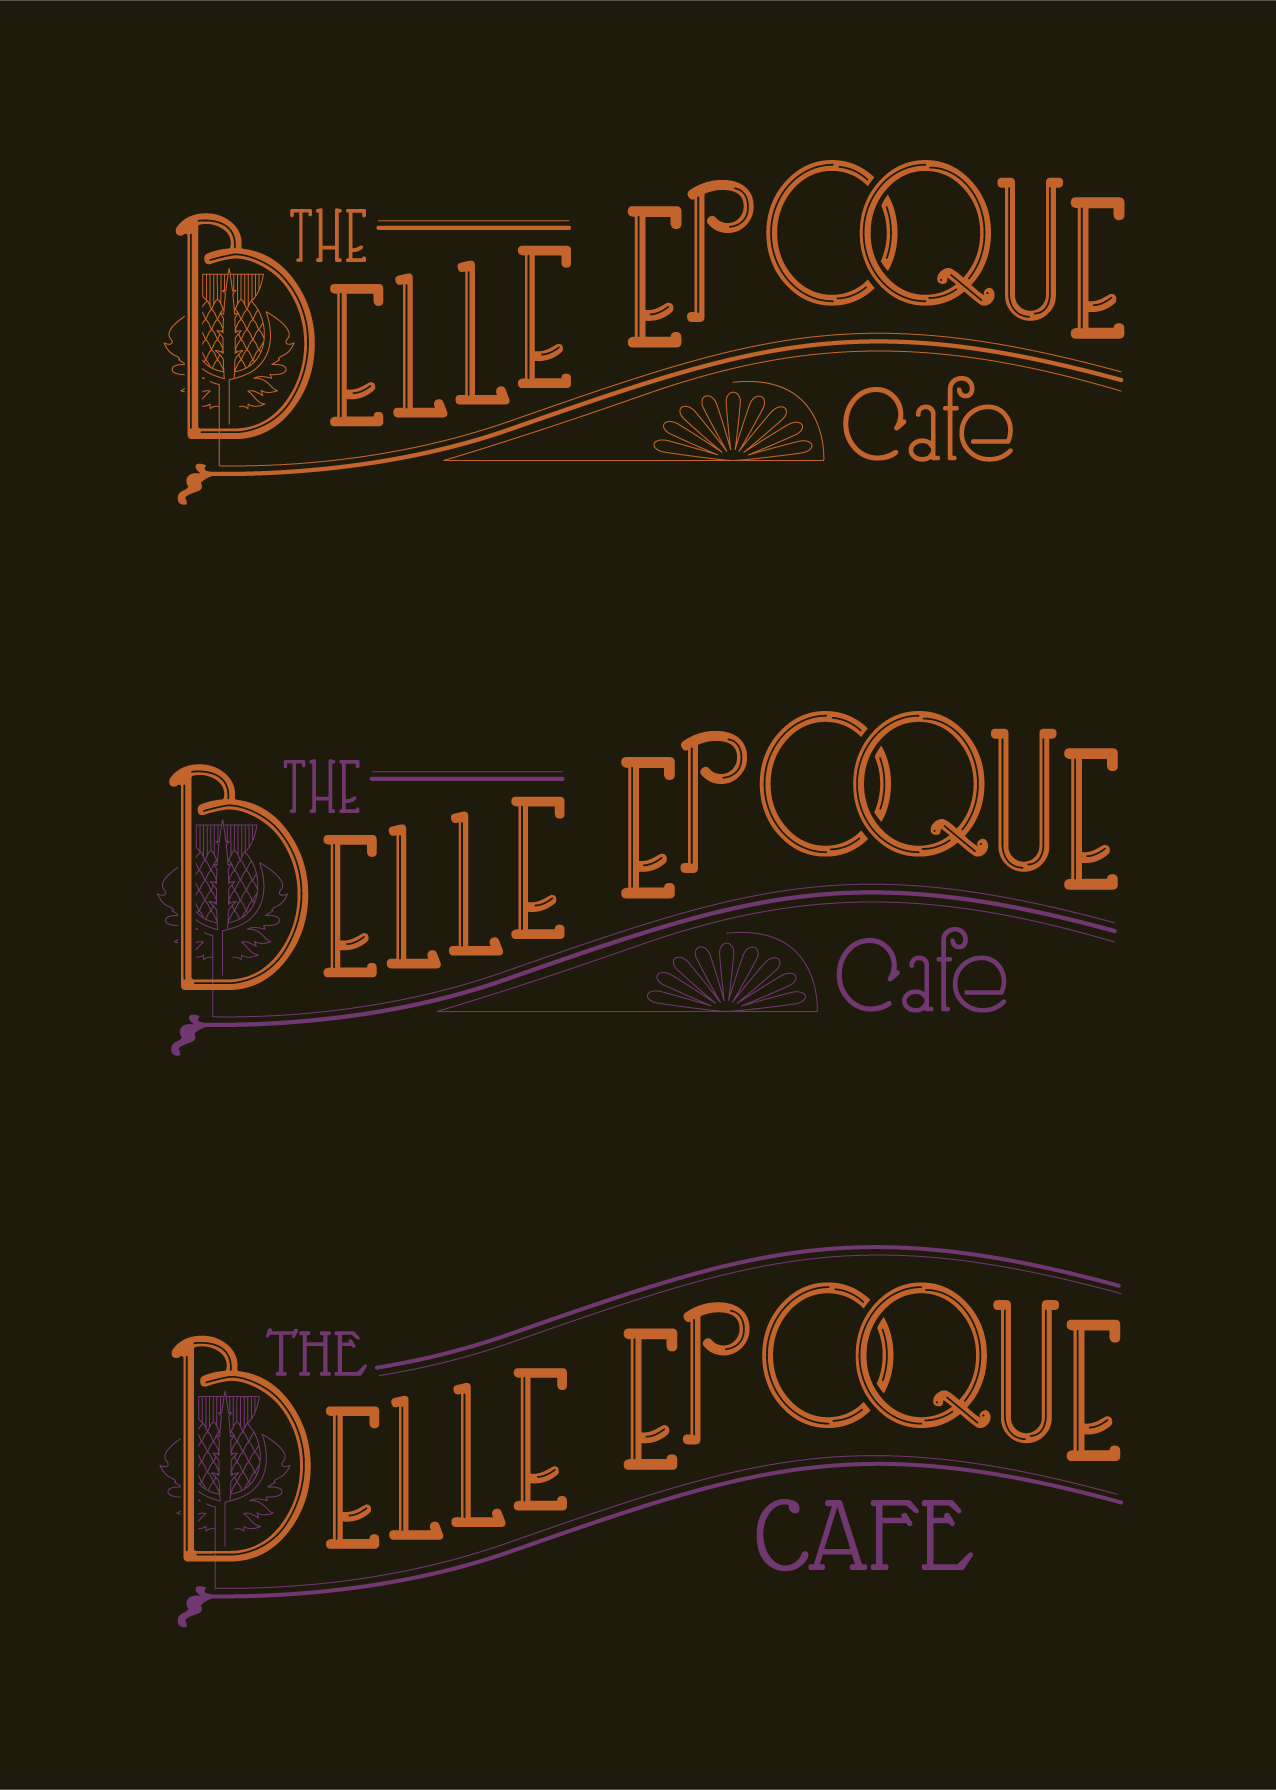 The Belle Epoque Art Deco Logo Design